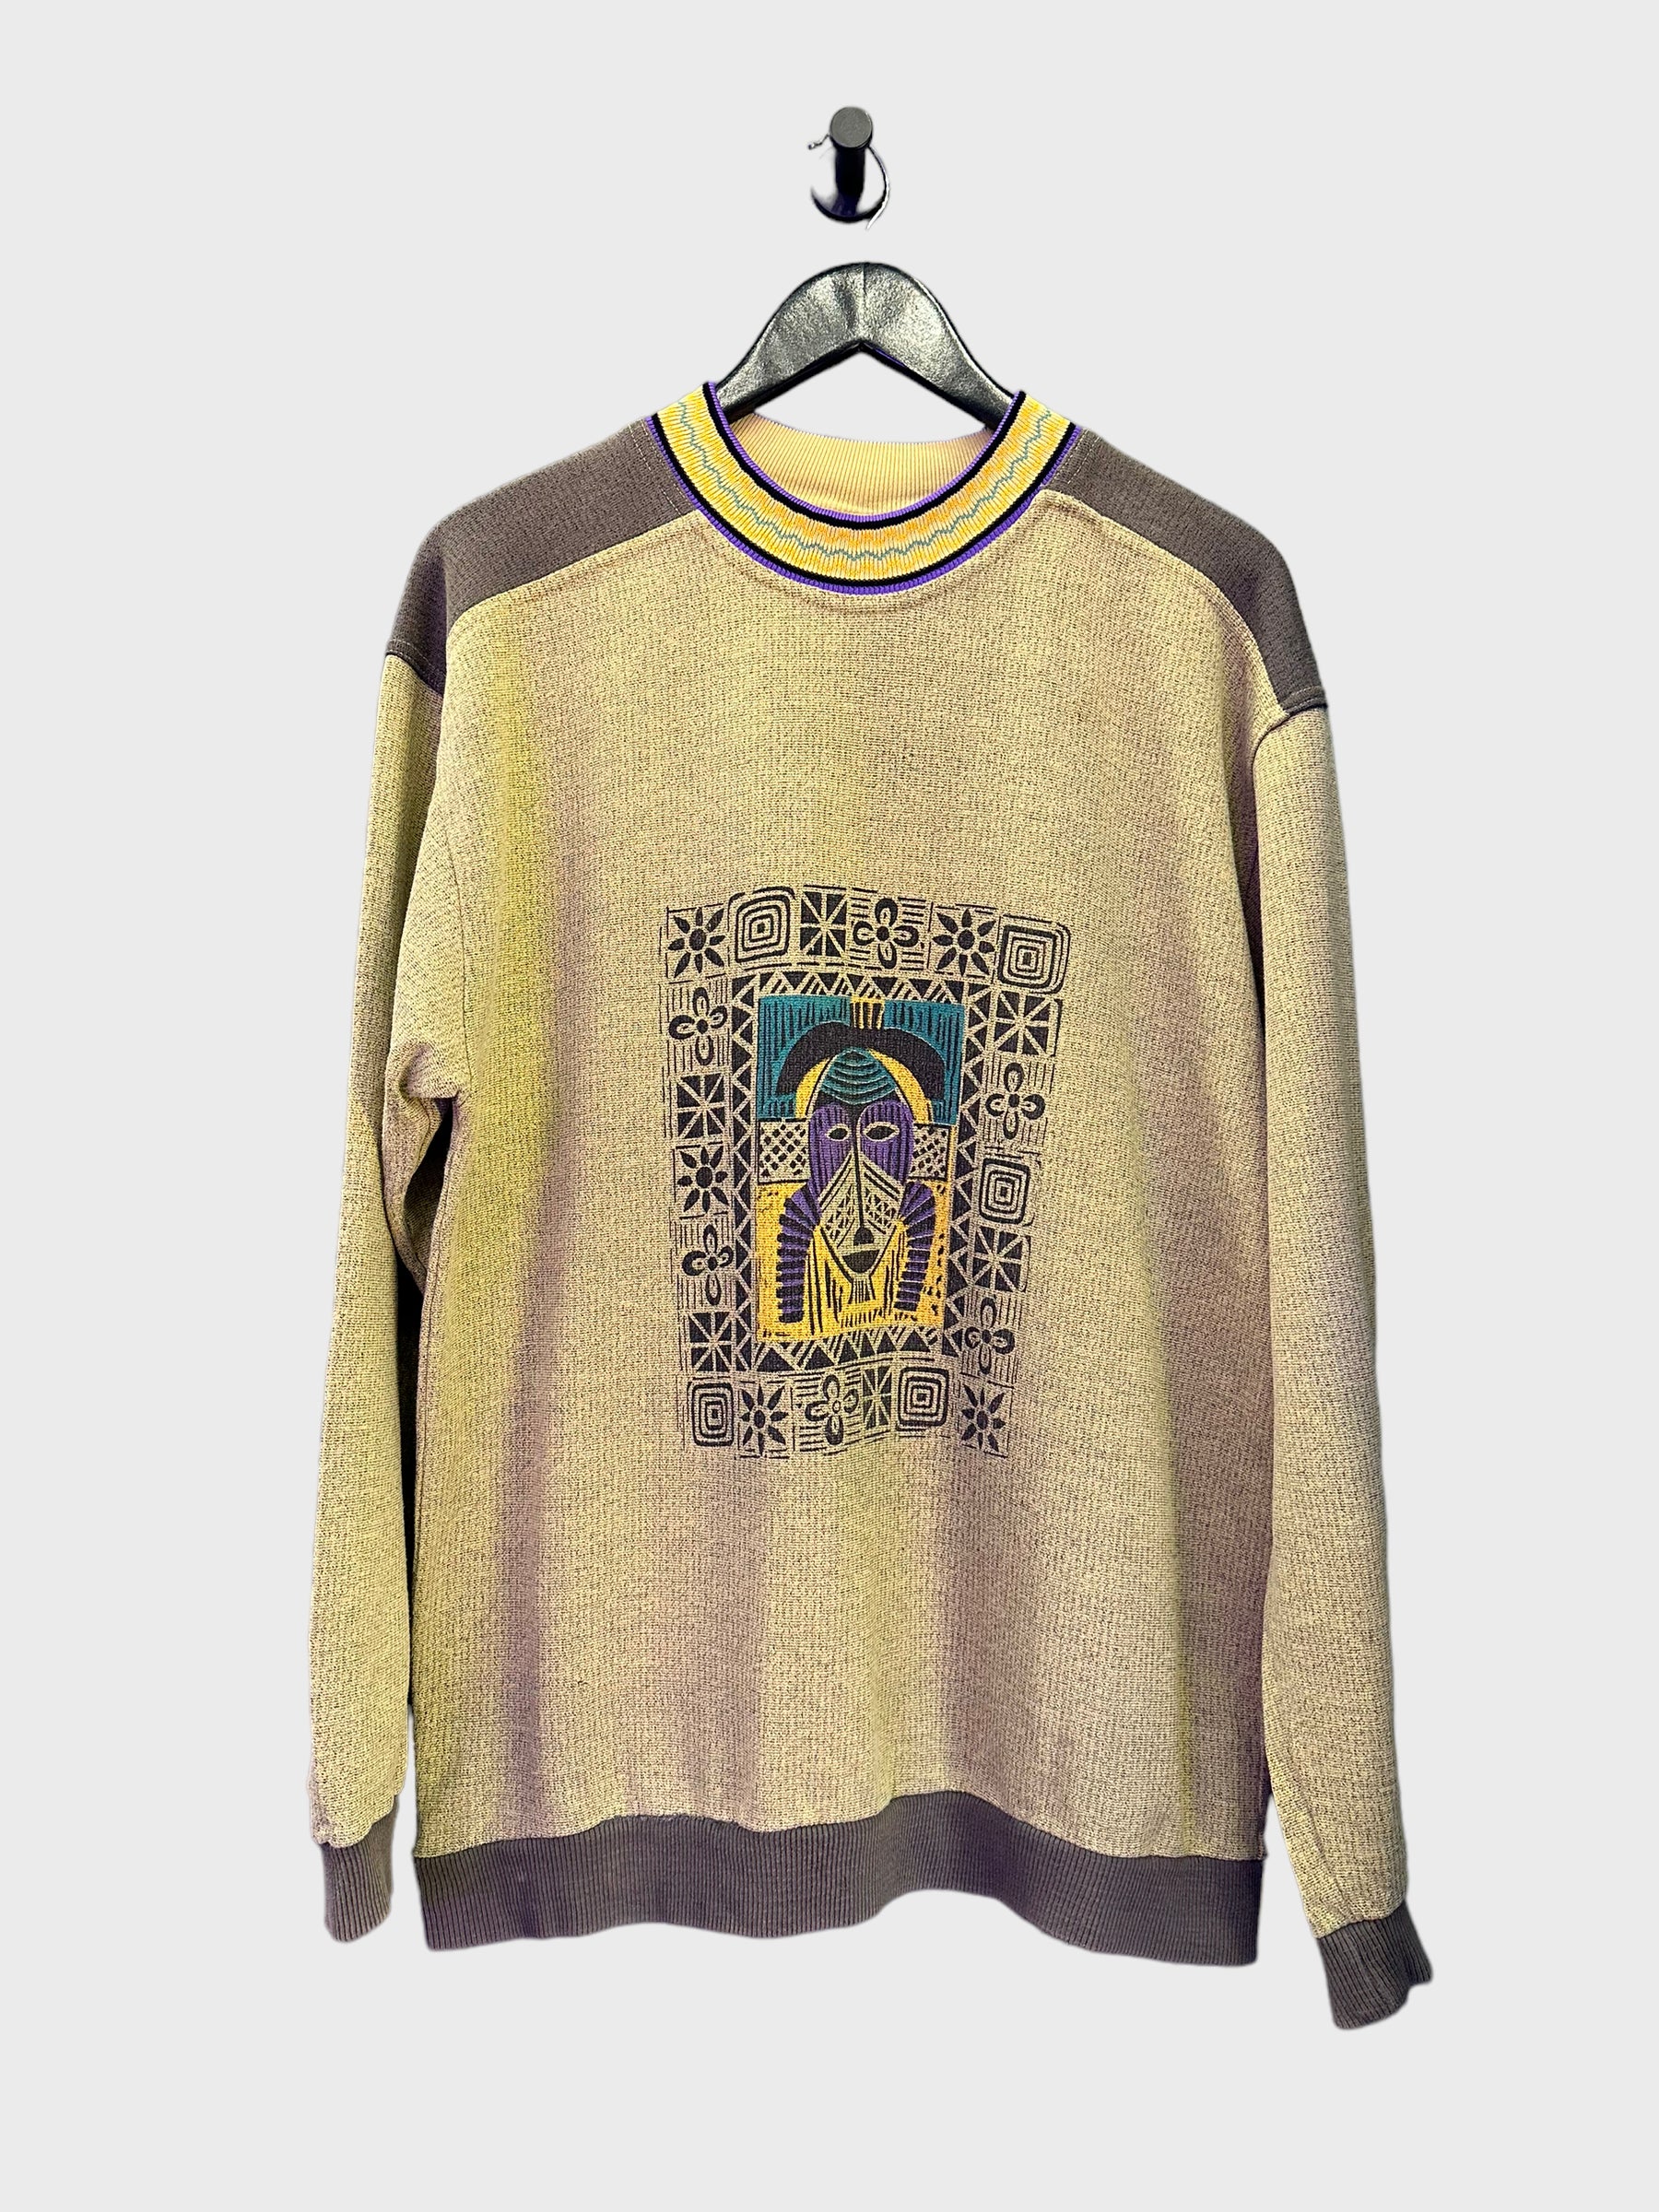 Vintage patterned sweater